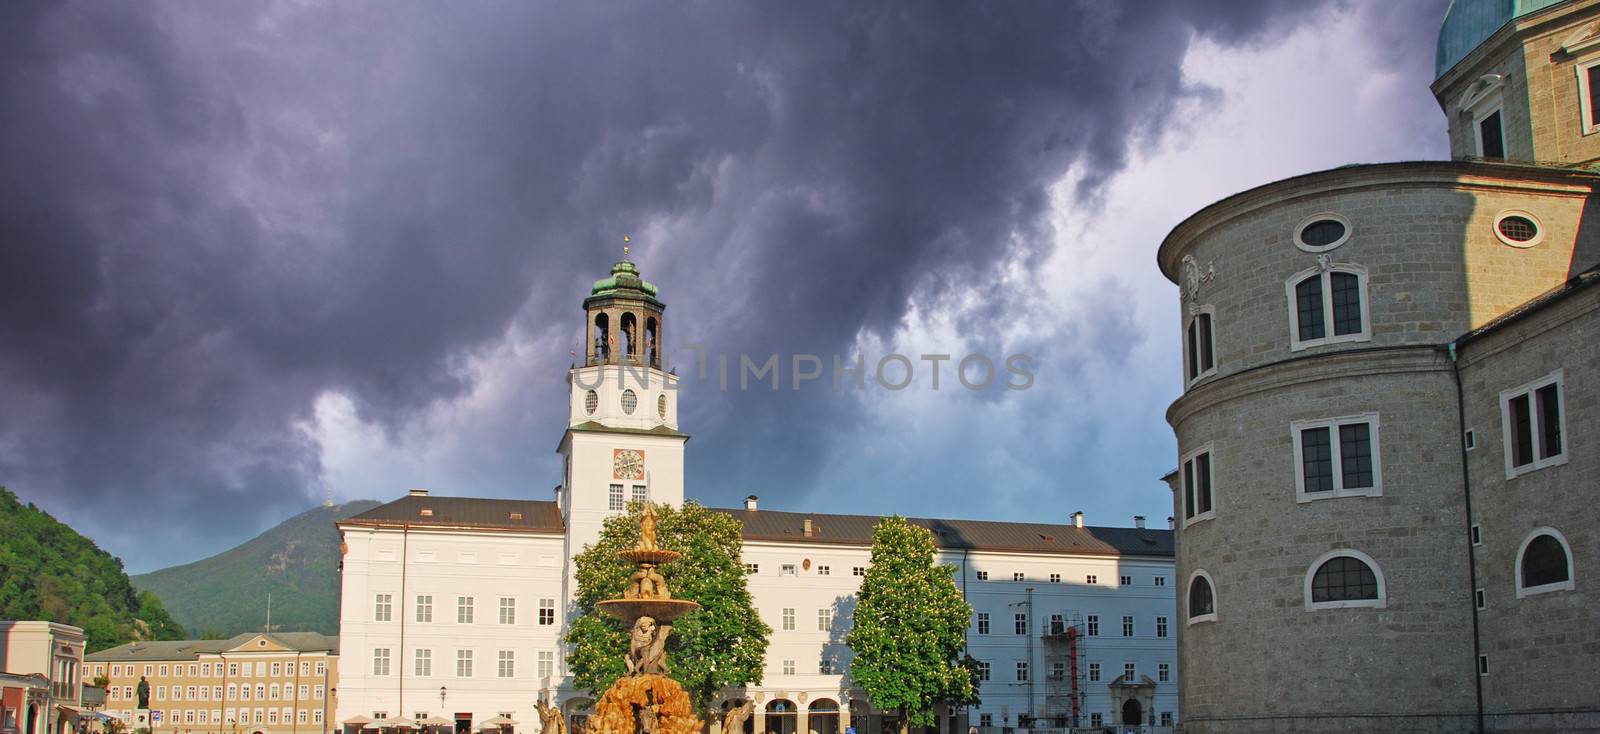 Storm approaching Salzburg in Austria